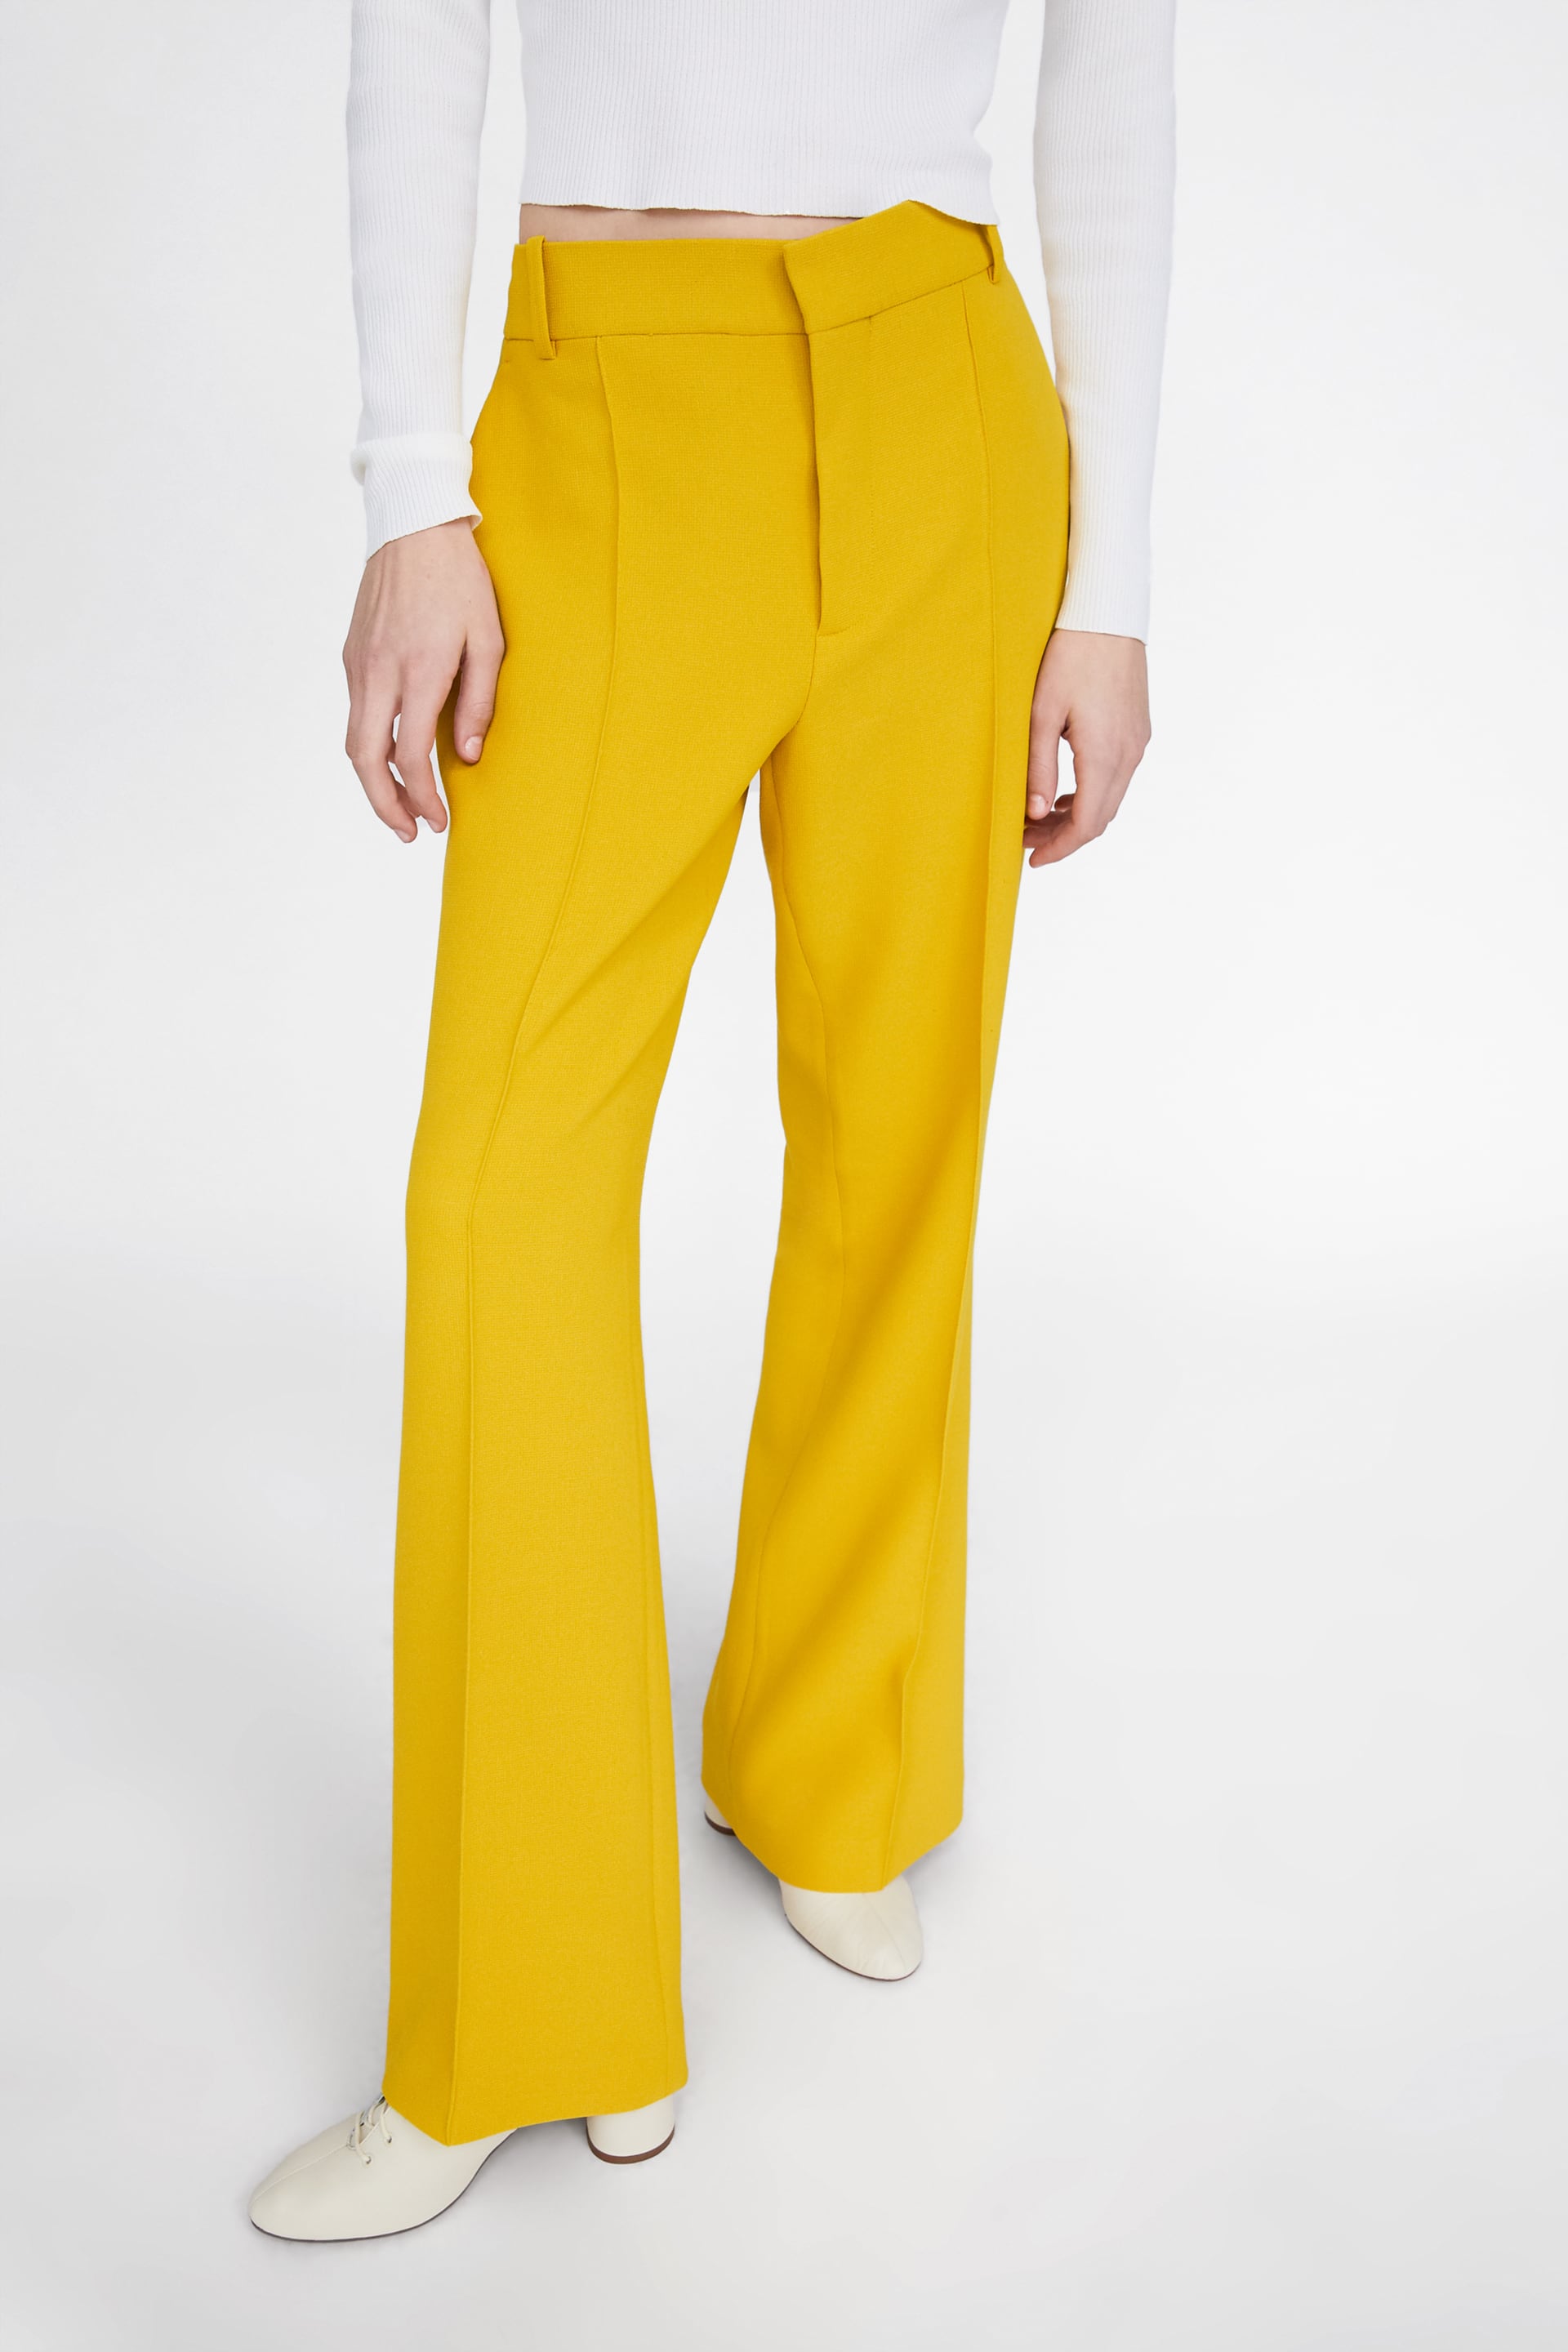 yellow pant suit zara